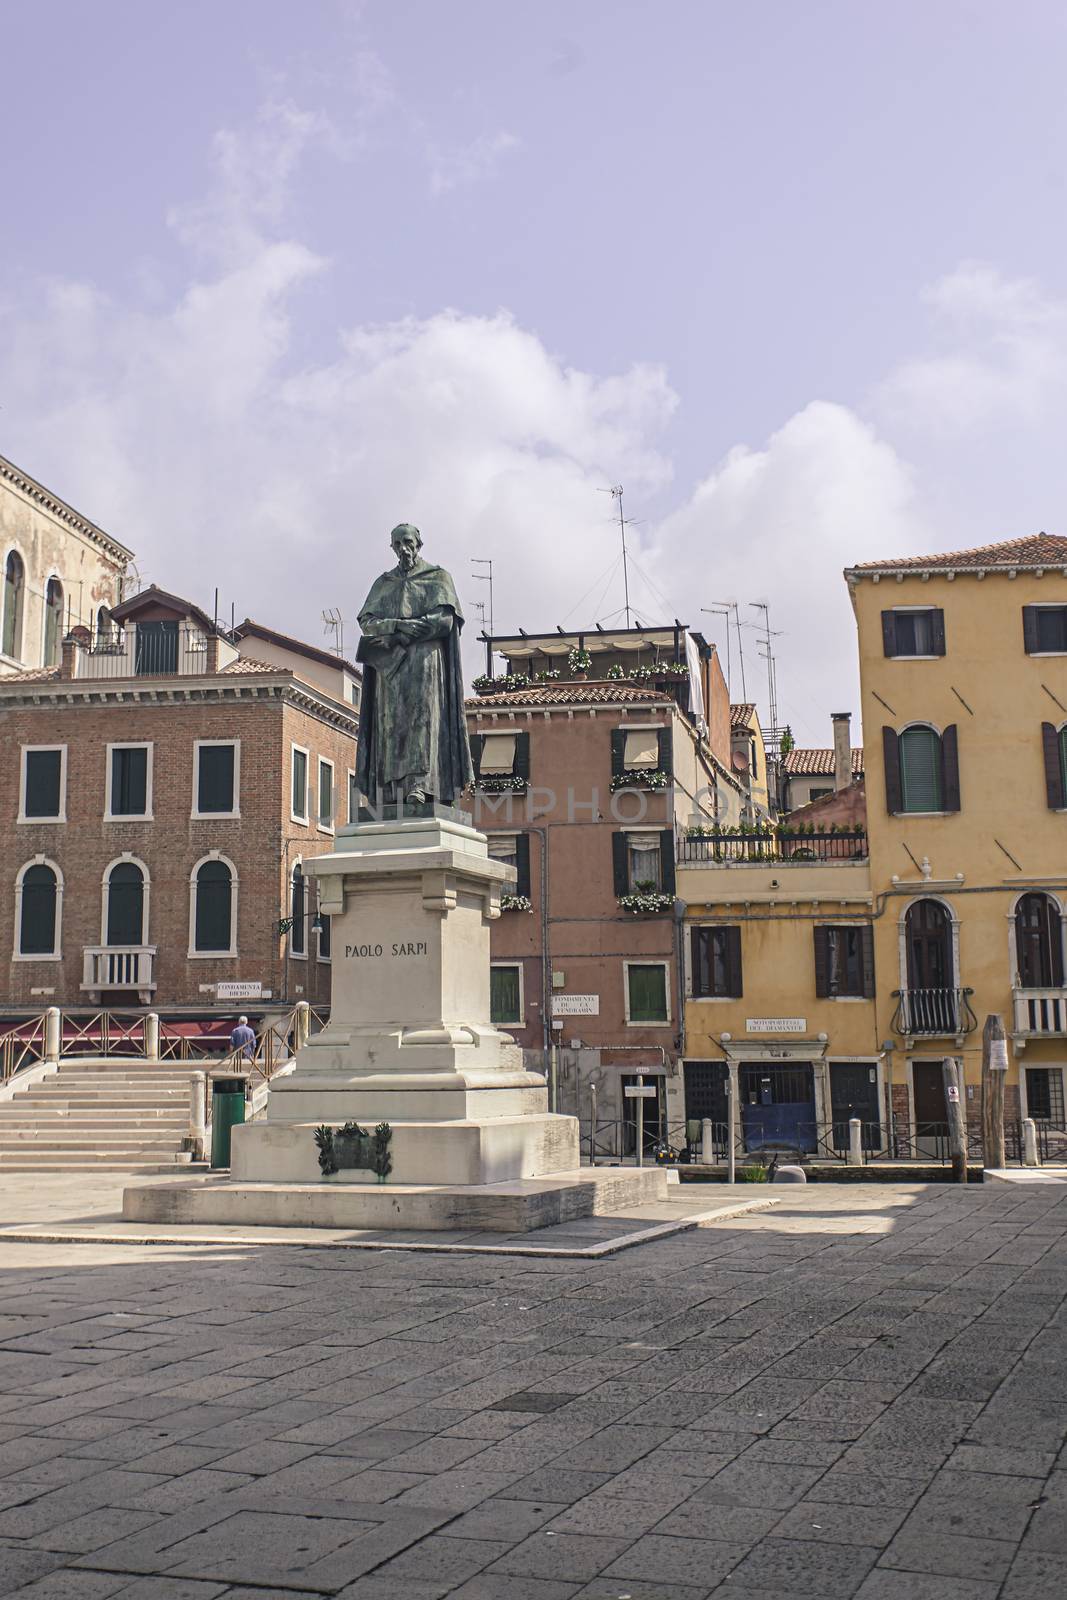 Paolo Sarpi statue in Venice by pippocarlot